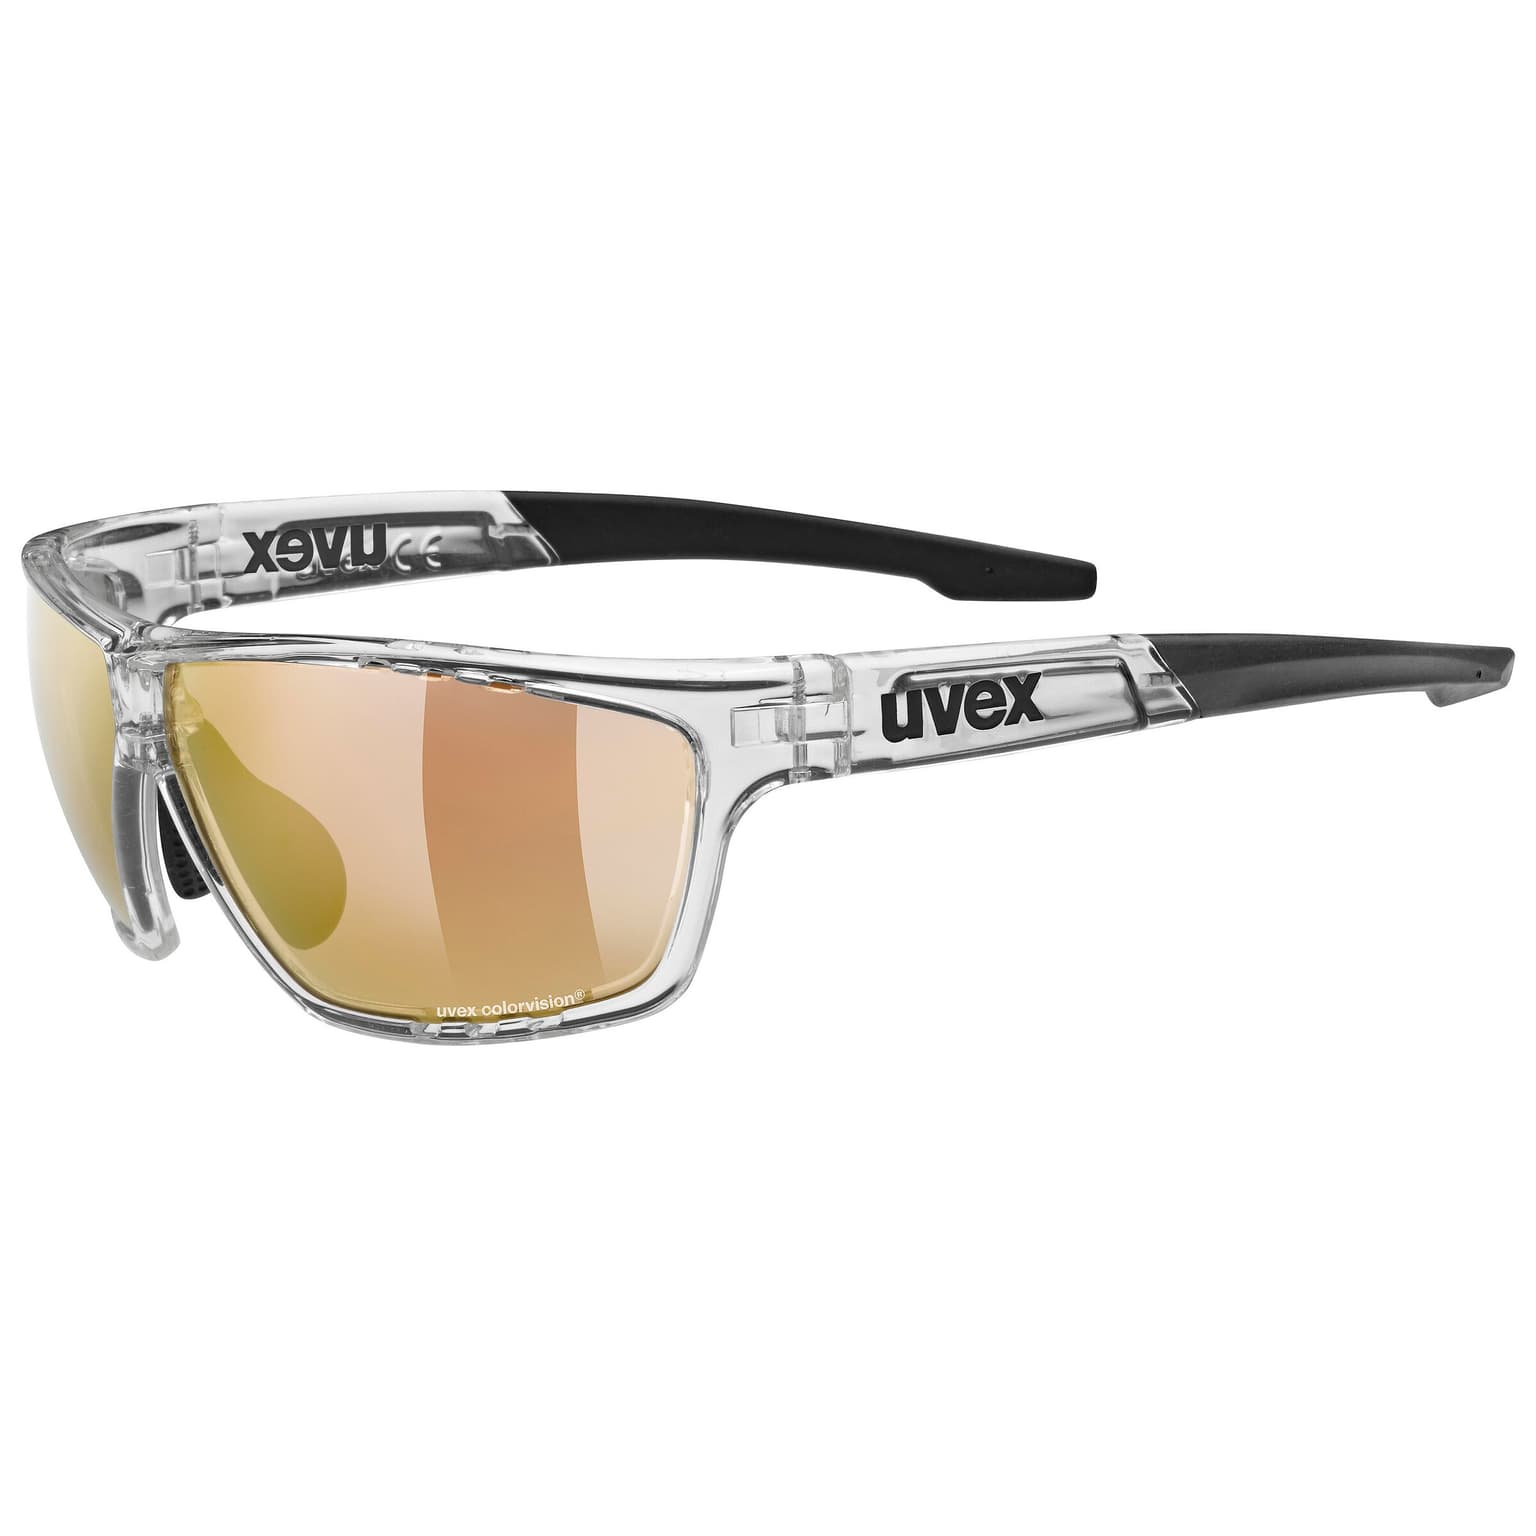 Uvex Uvex Colorvision Occhiali sportivi argento 1